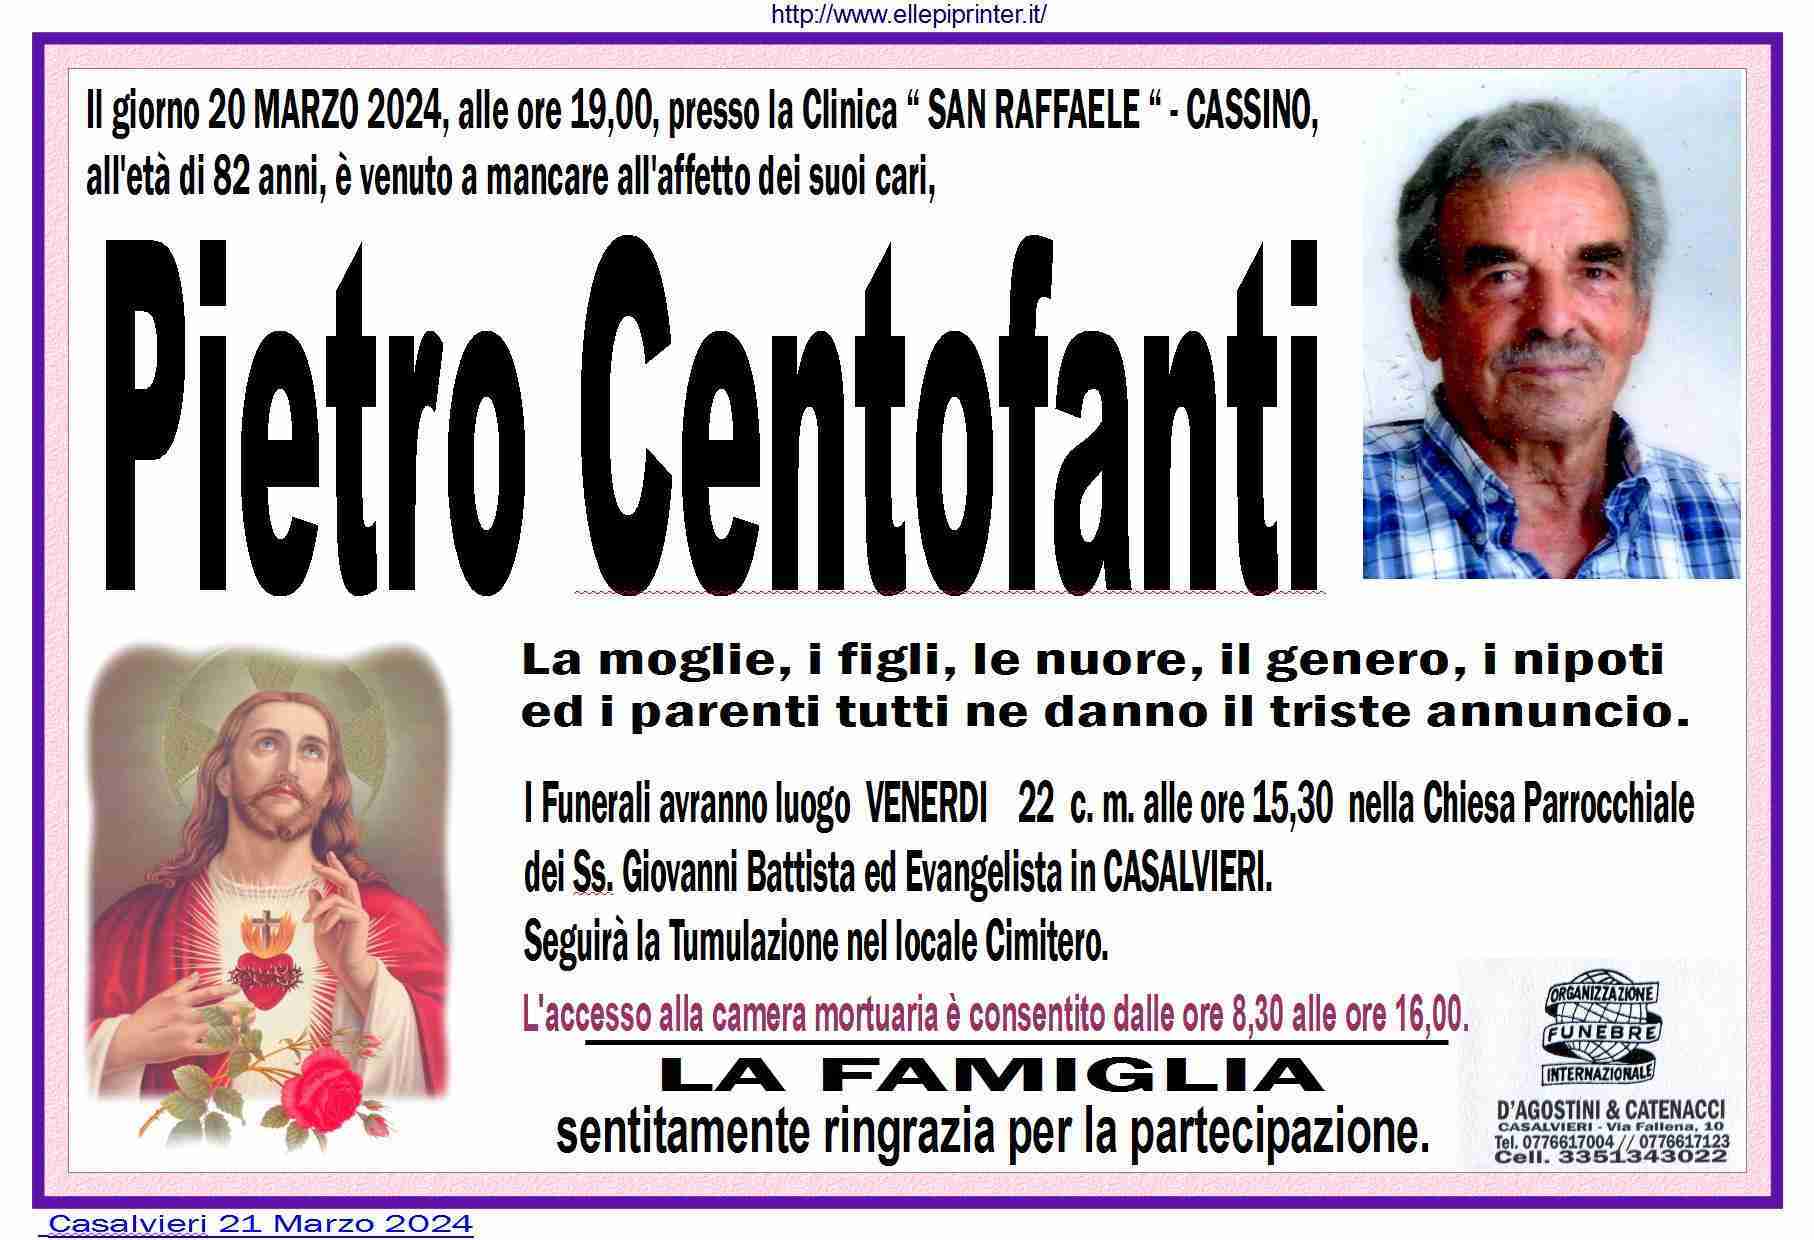 Pietro Centofanti